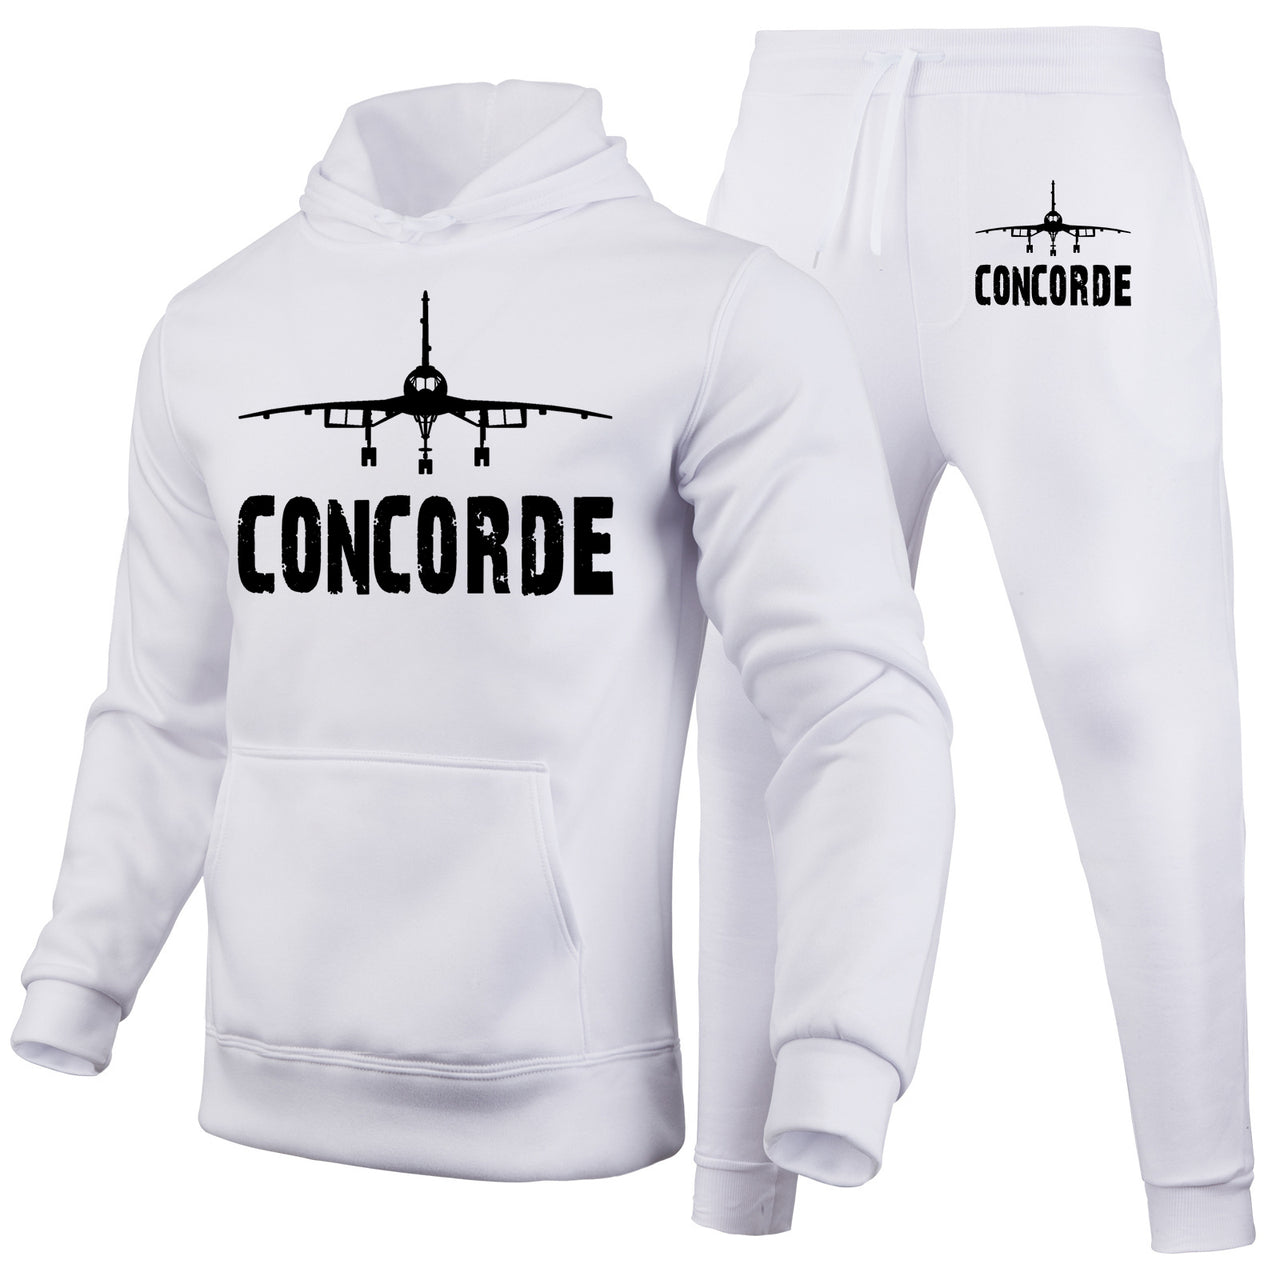 Concorde & Plane Designed Hoodies & Sweatpants Set